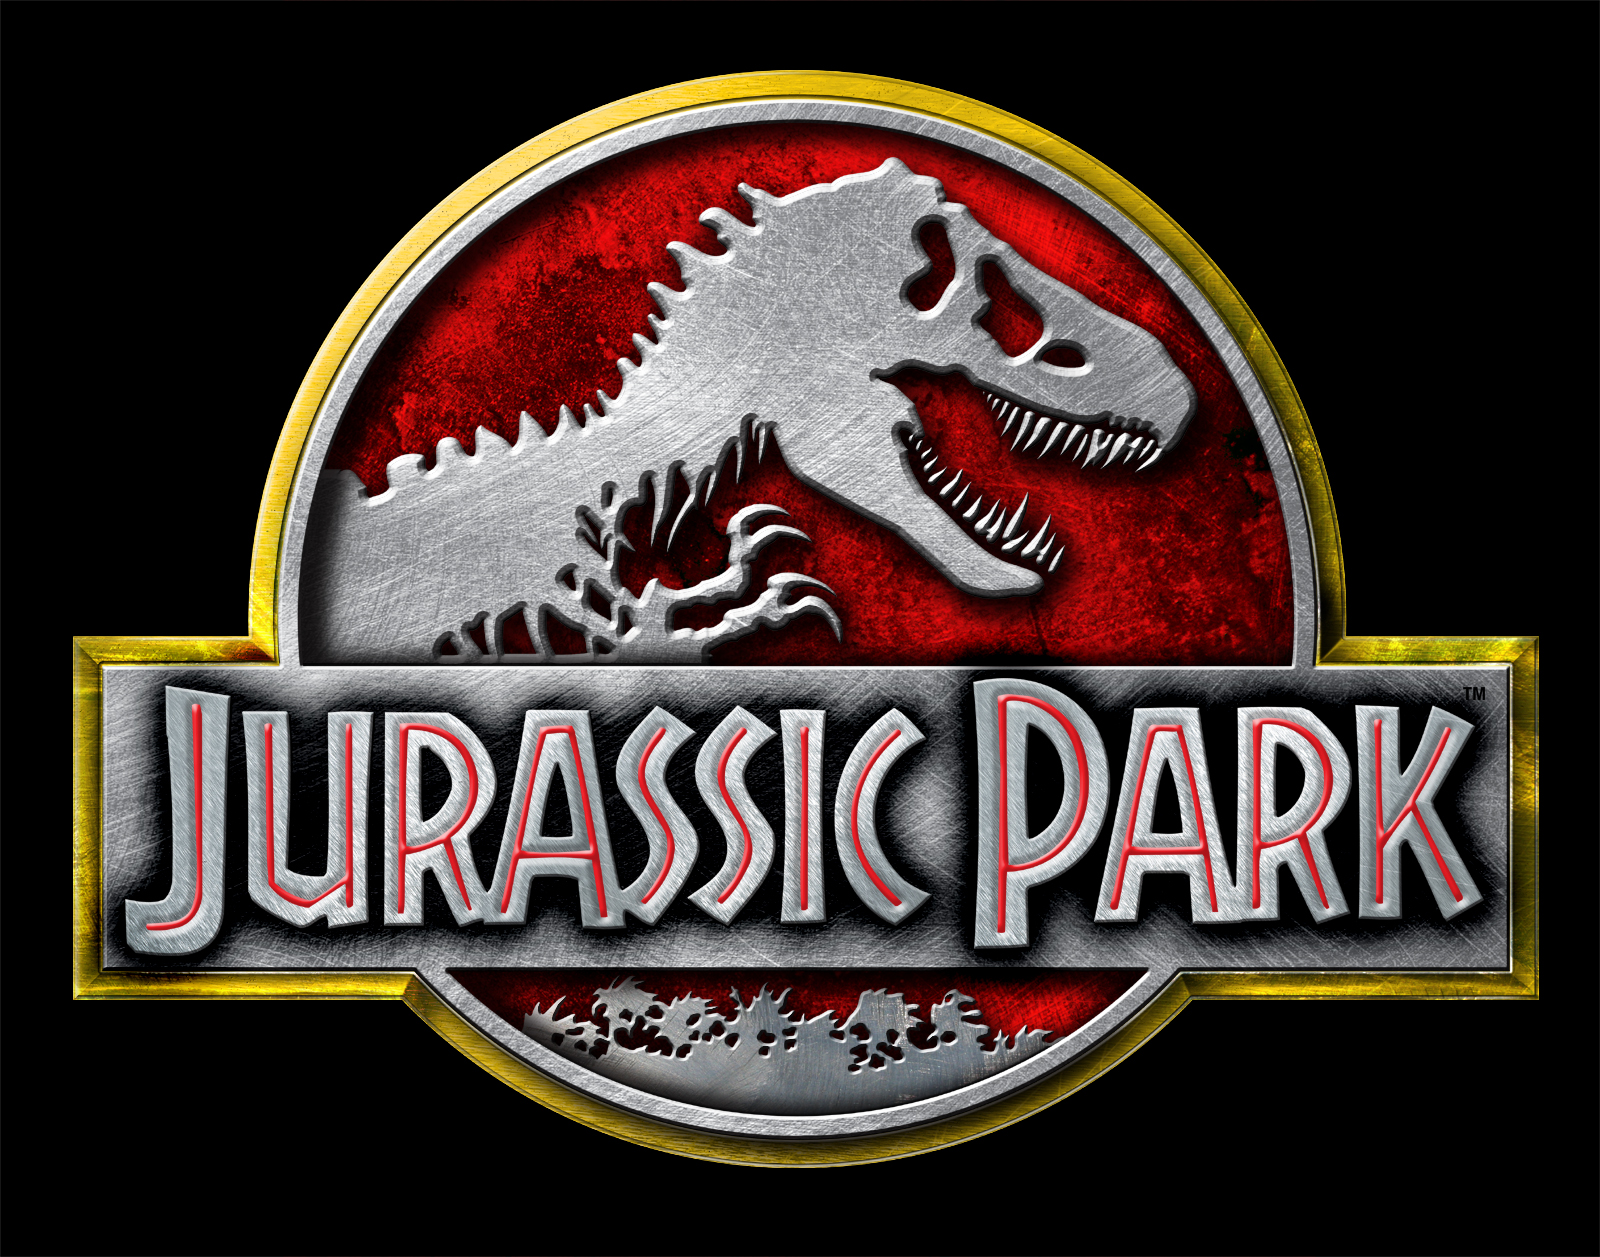 Jurassic Park #5